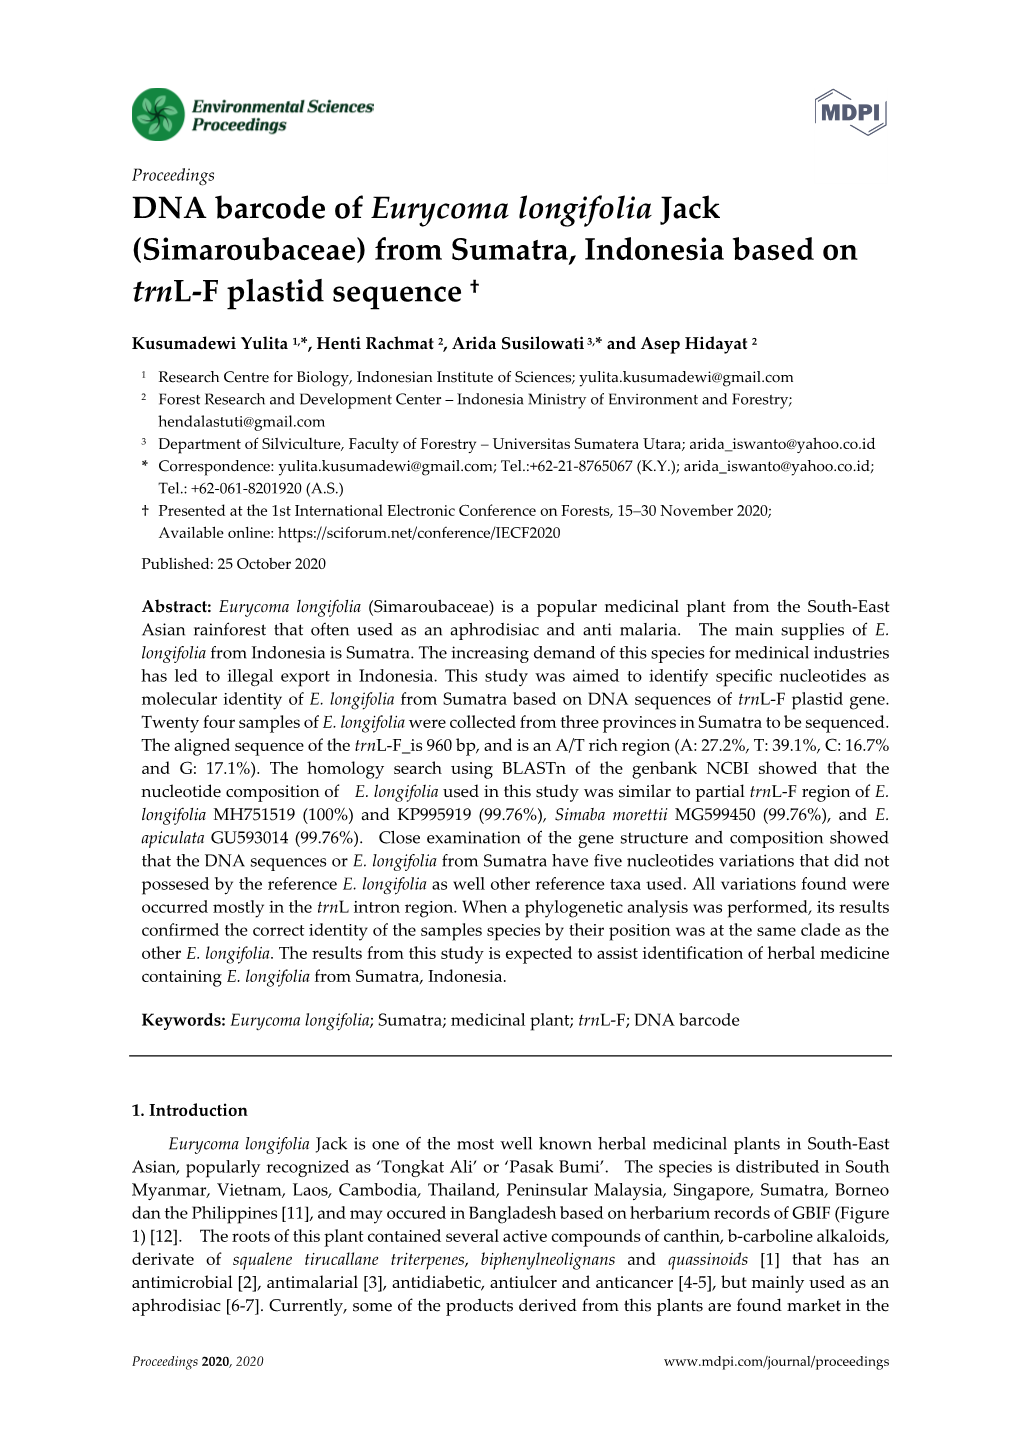 DNA Barcode of Eurycoma Longifolia Jack (Simaroubaceae) from Sumatra, Indonesia Based on Trnl-F Plastid Sequence †